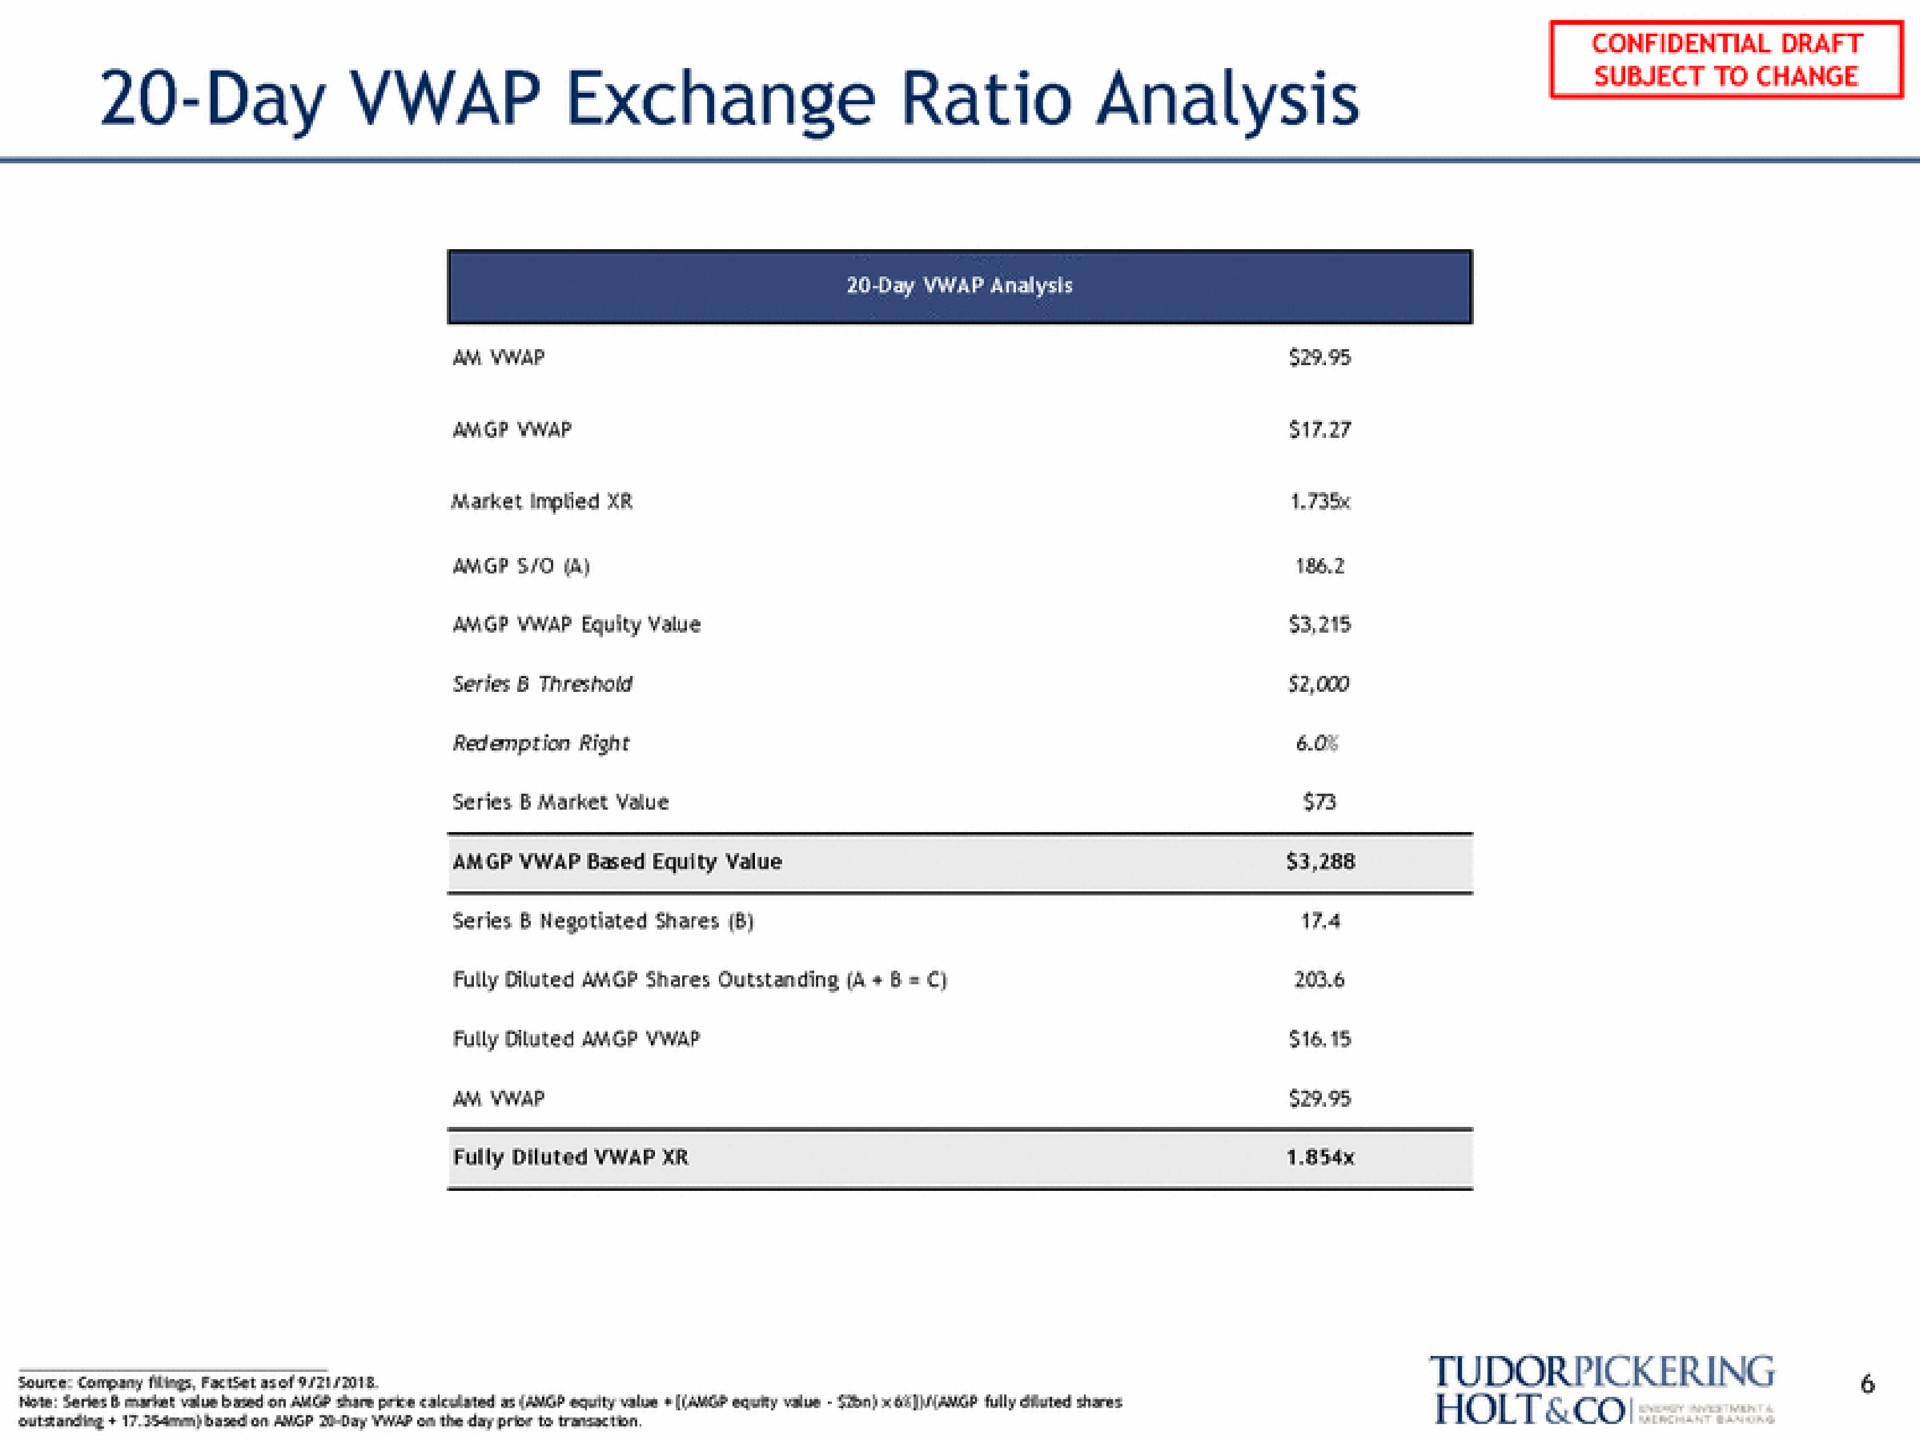 day exchange ratio analysis value | Tudor, Pickering, Holt & Co